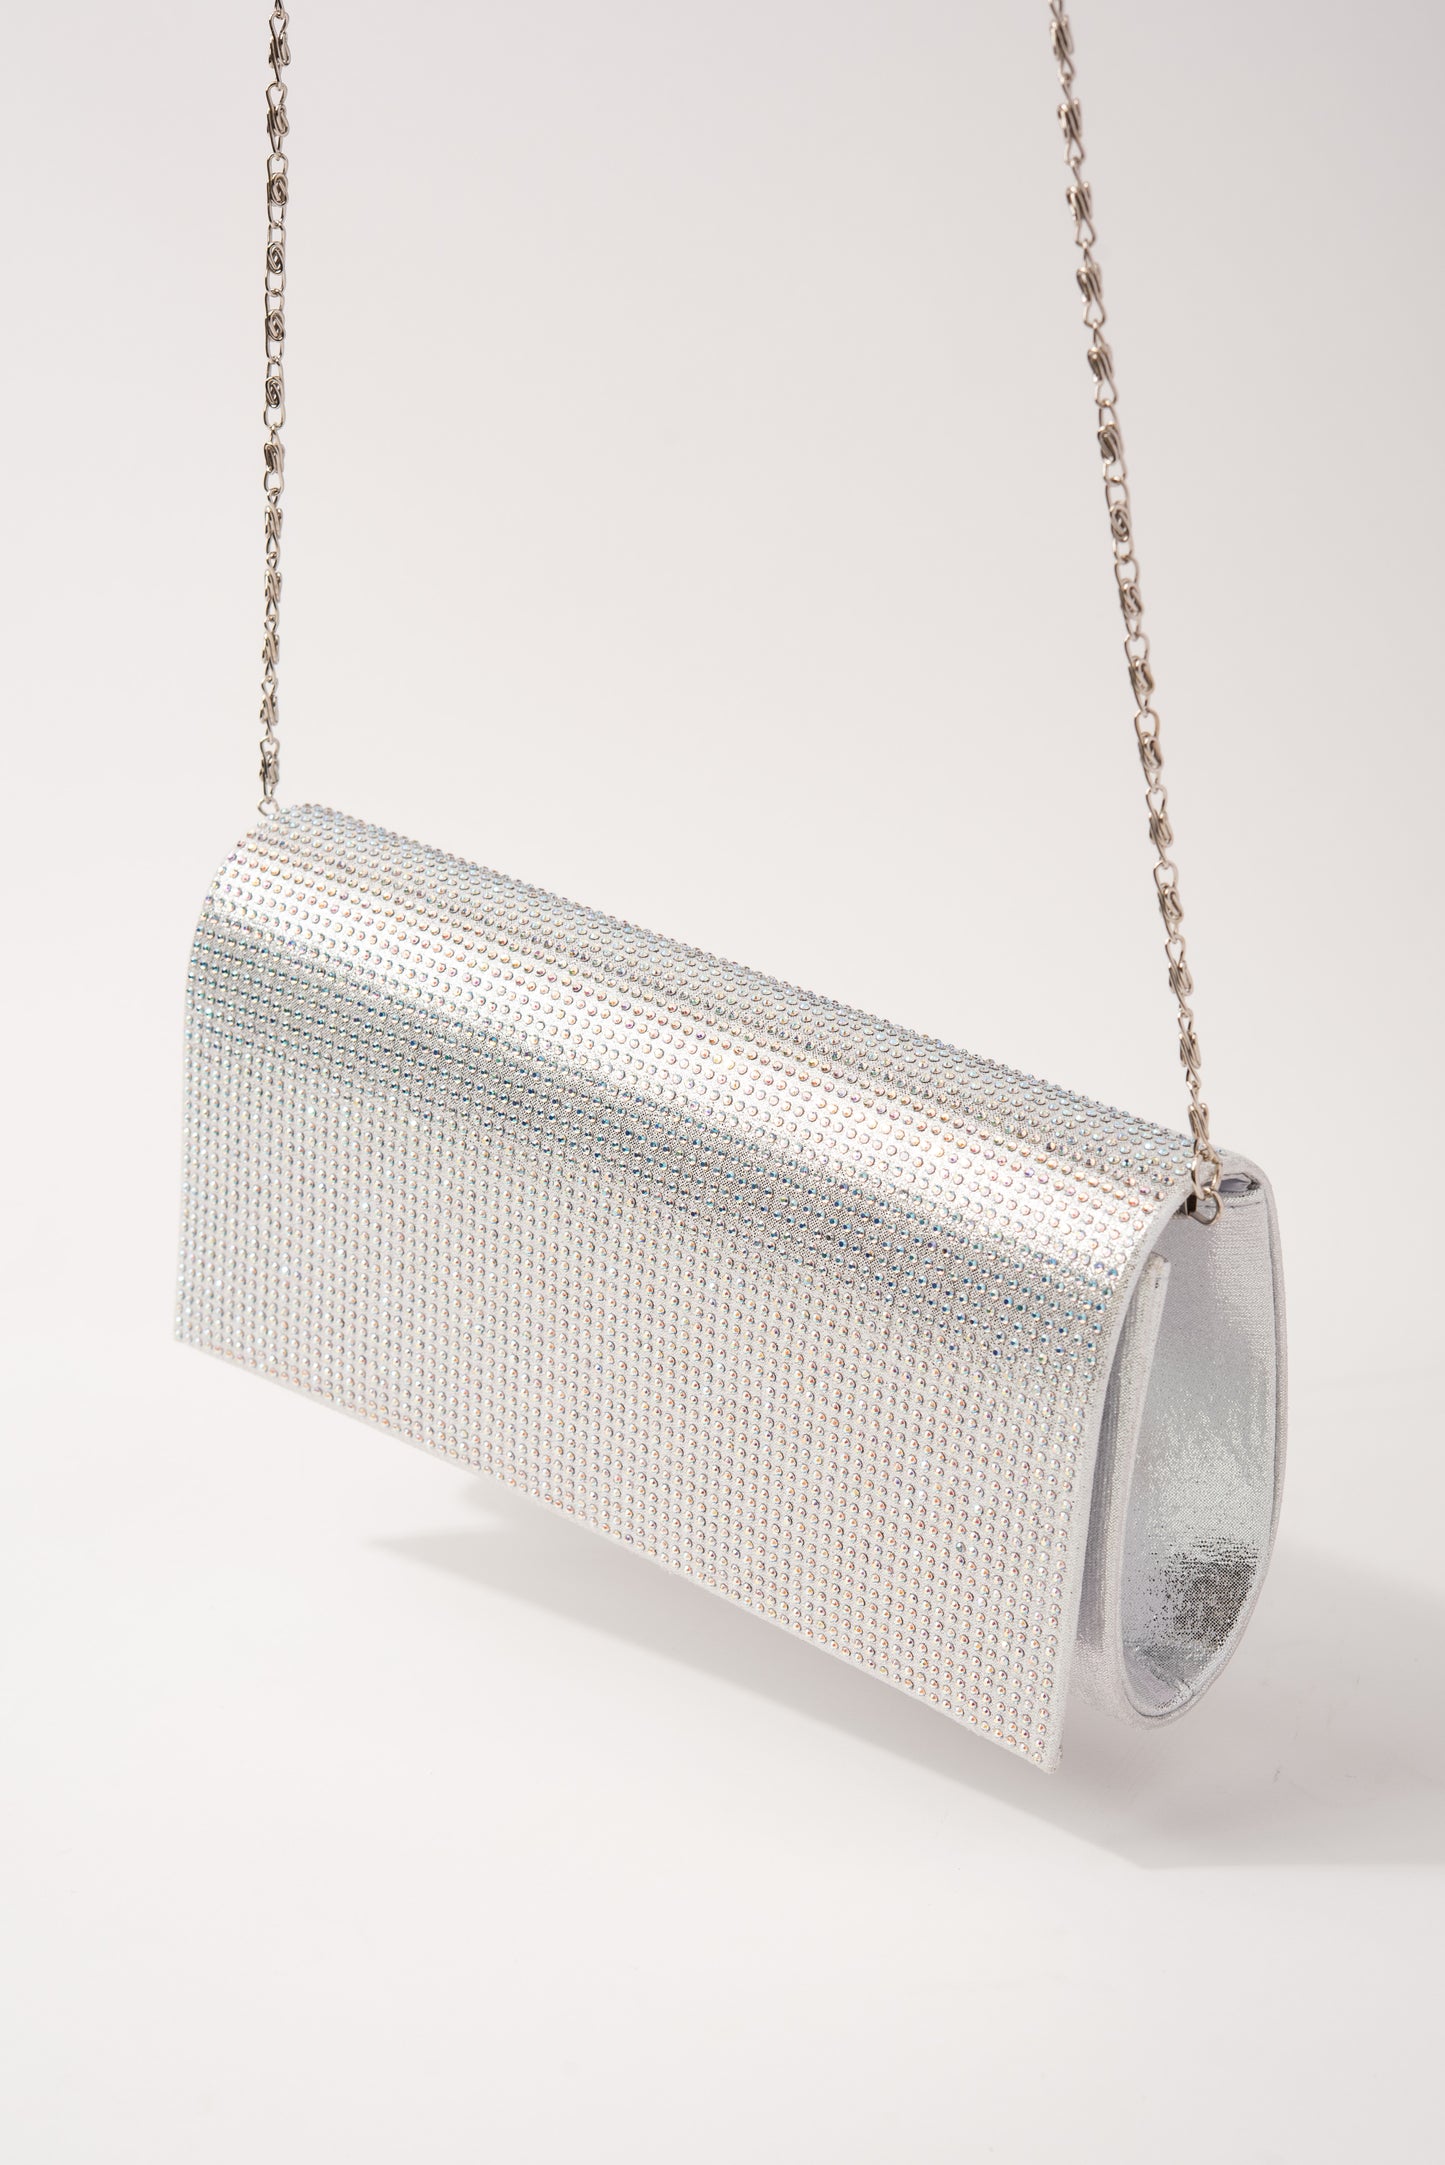 Rhinestone Clutch Purse Evening Bag with Chain Strap - Silver Iridescent